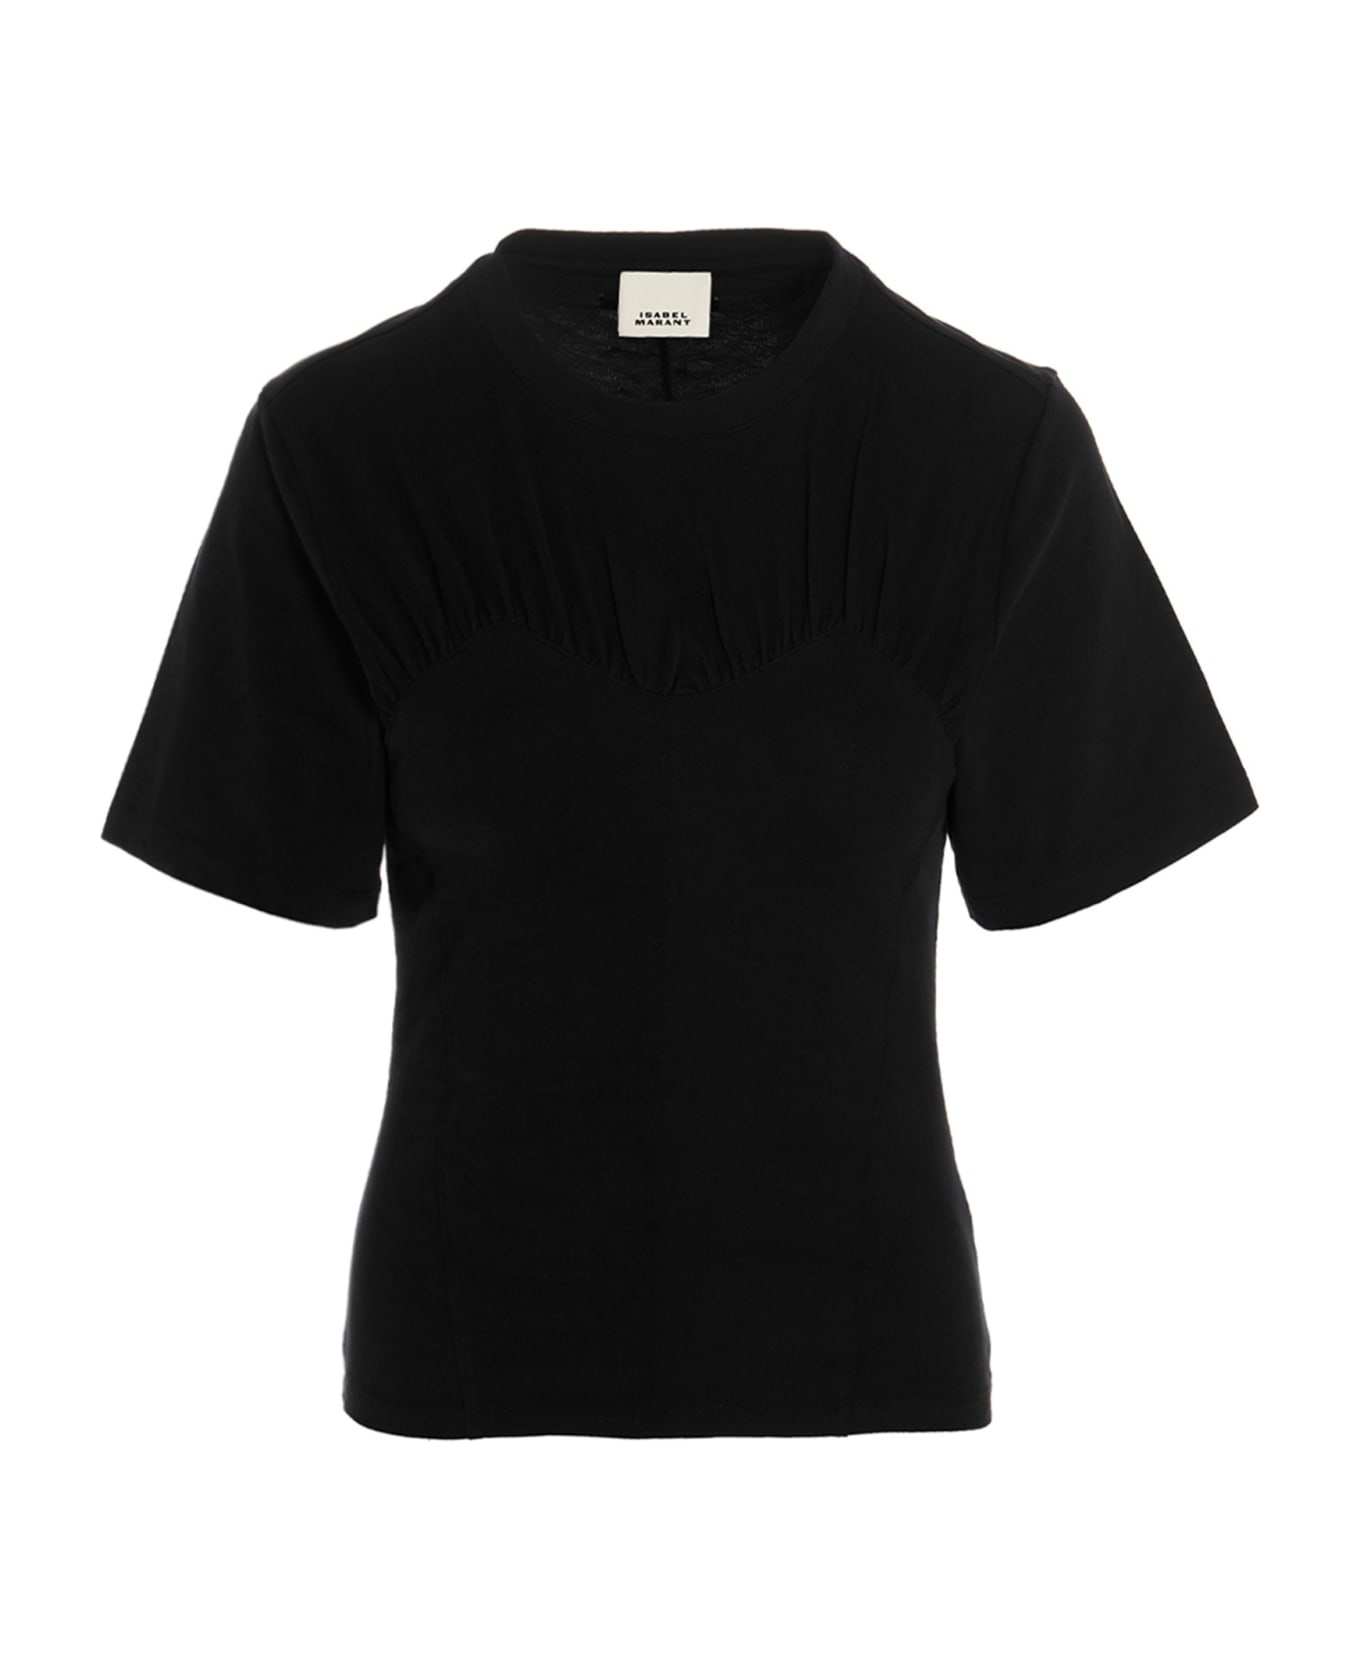 Isabel Marant Zazie T-shirt - Black Tシャツ